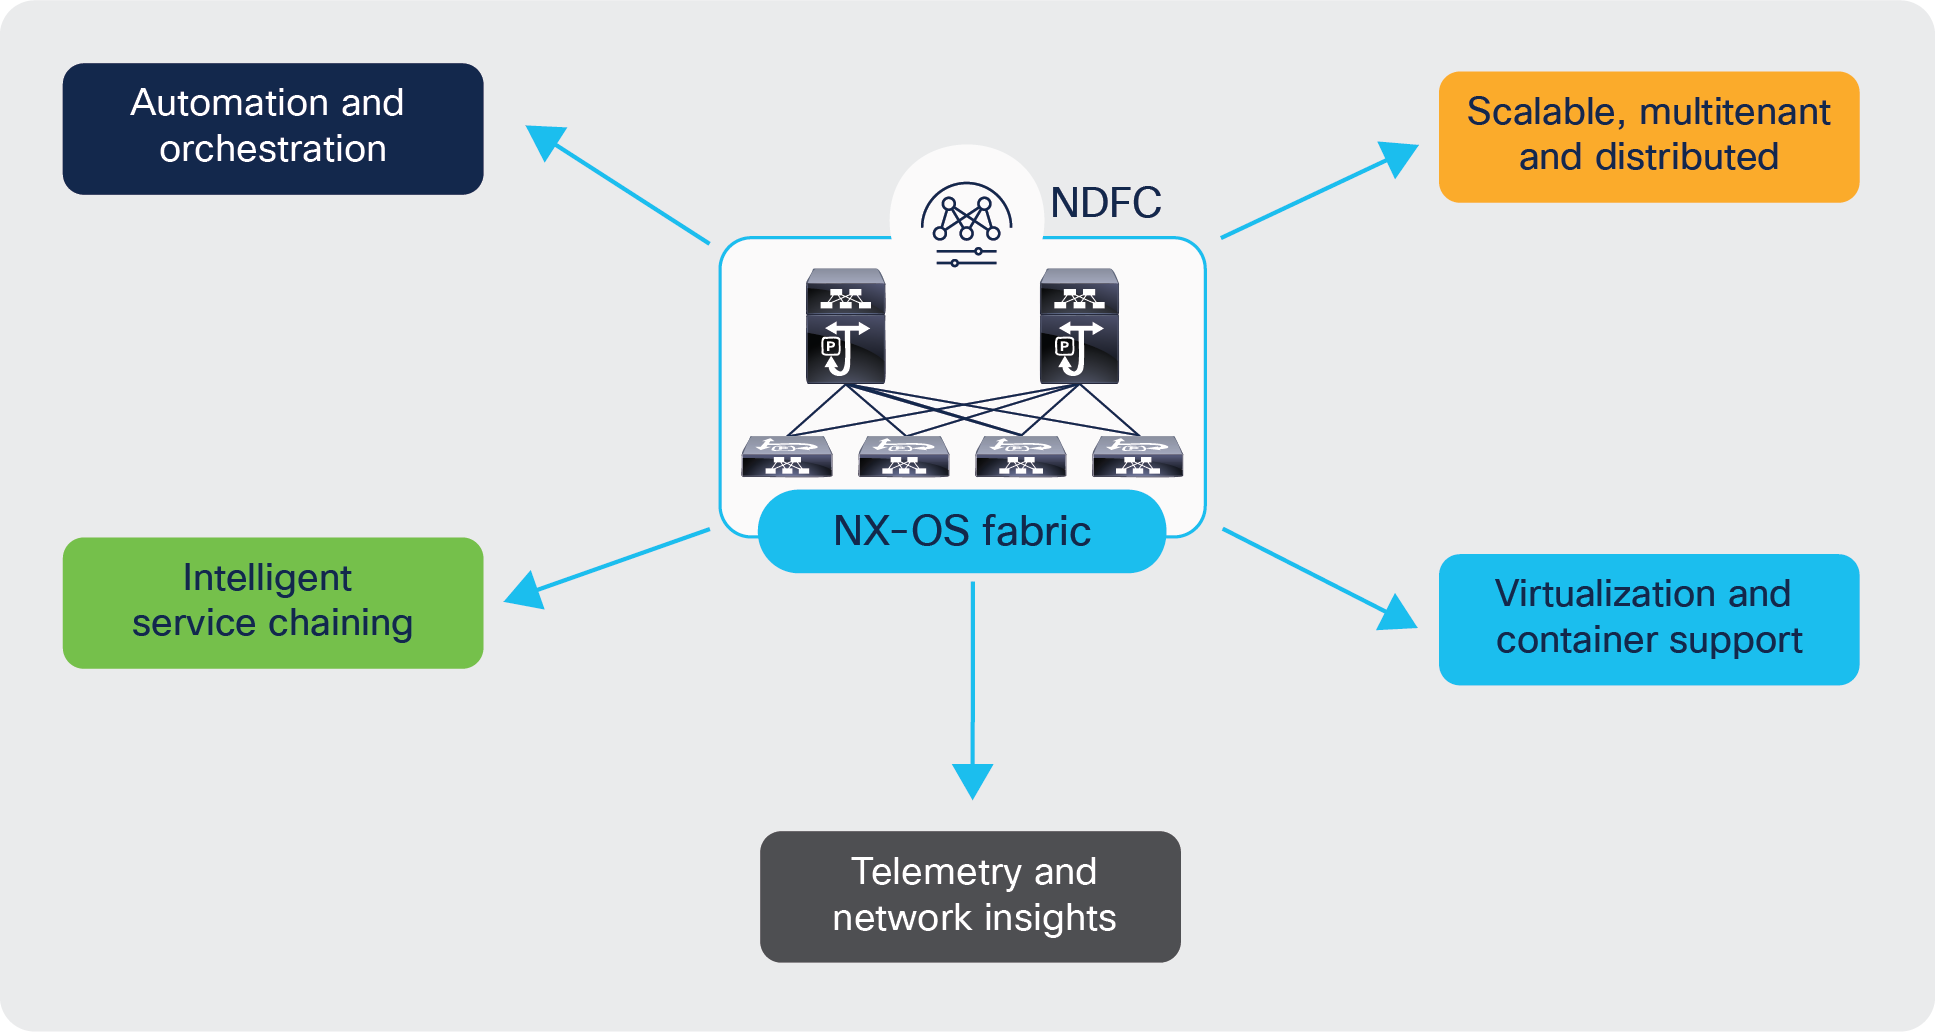 Cisco NX-OS fabric: Key benefits for telco data centers